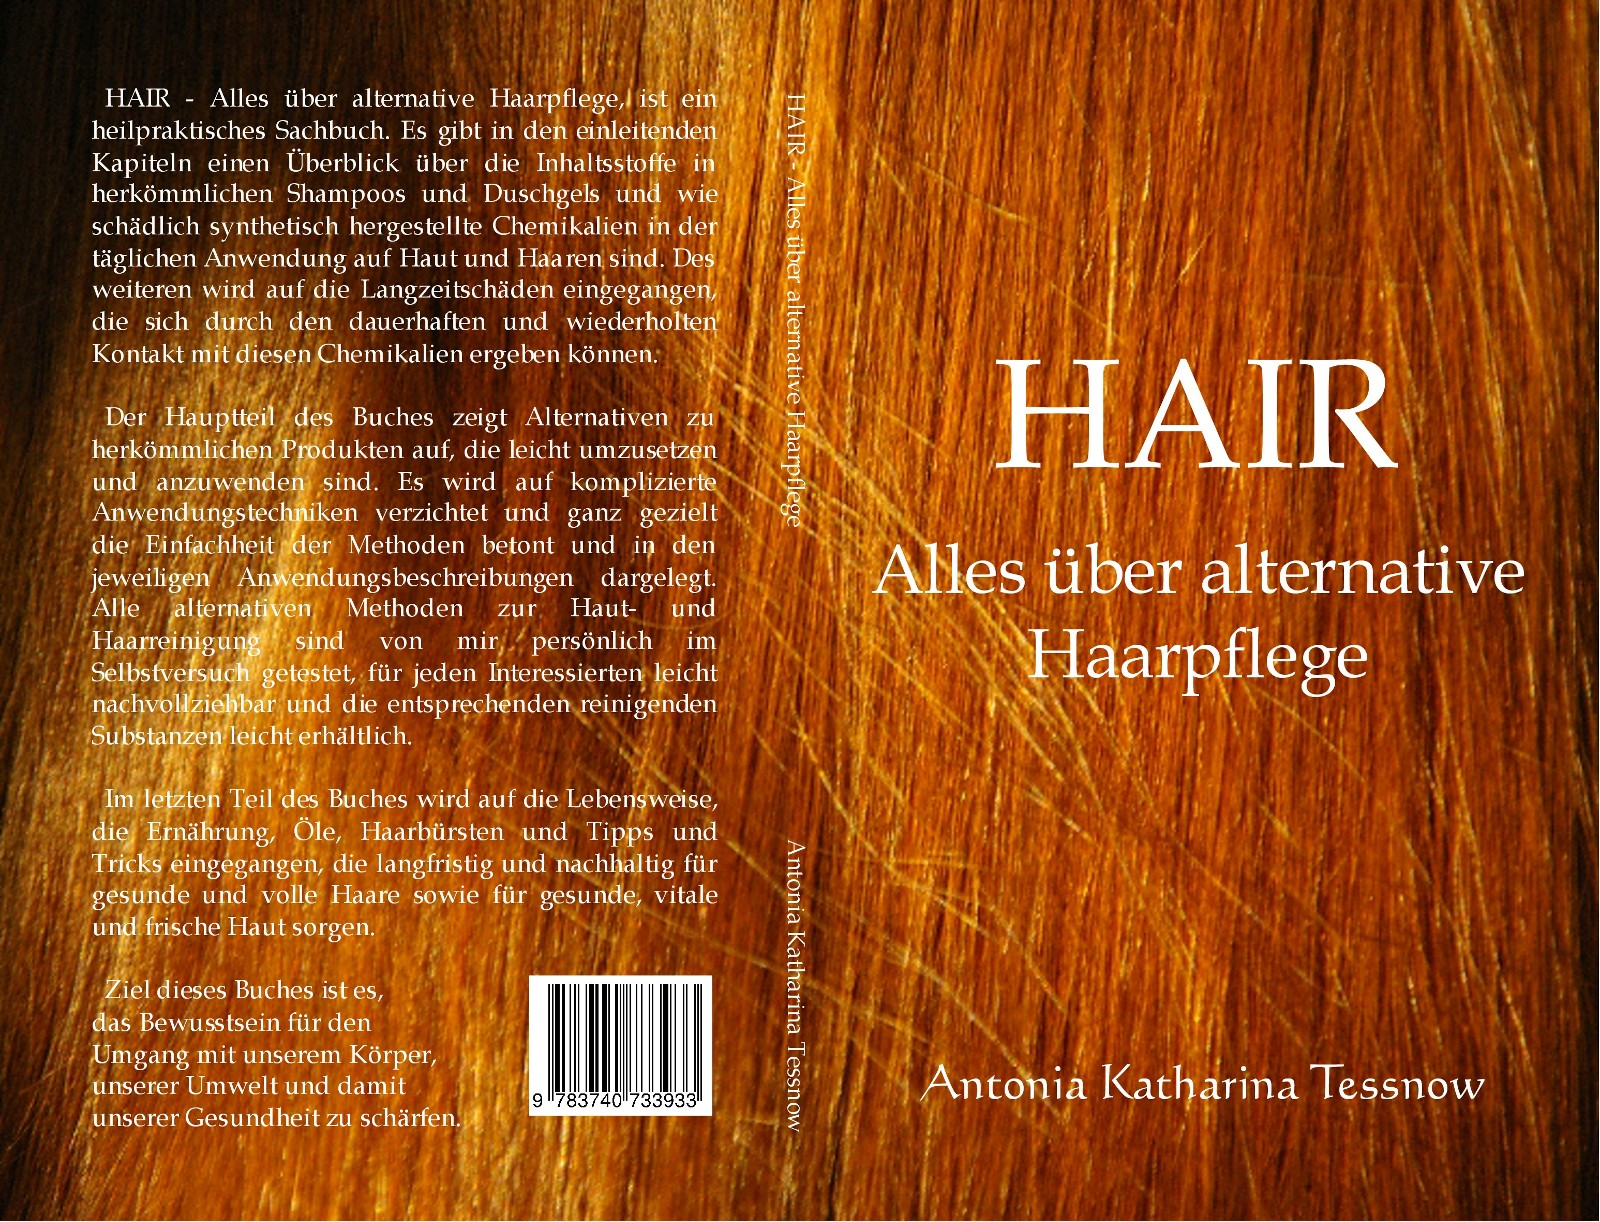 HAIR – Alles über alternative Haarpflege